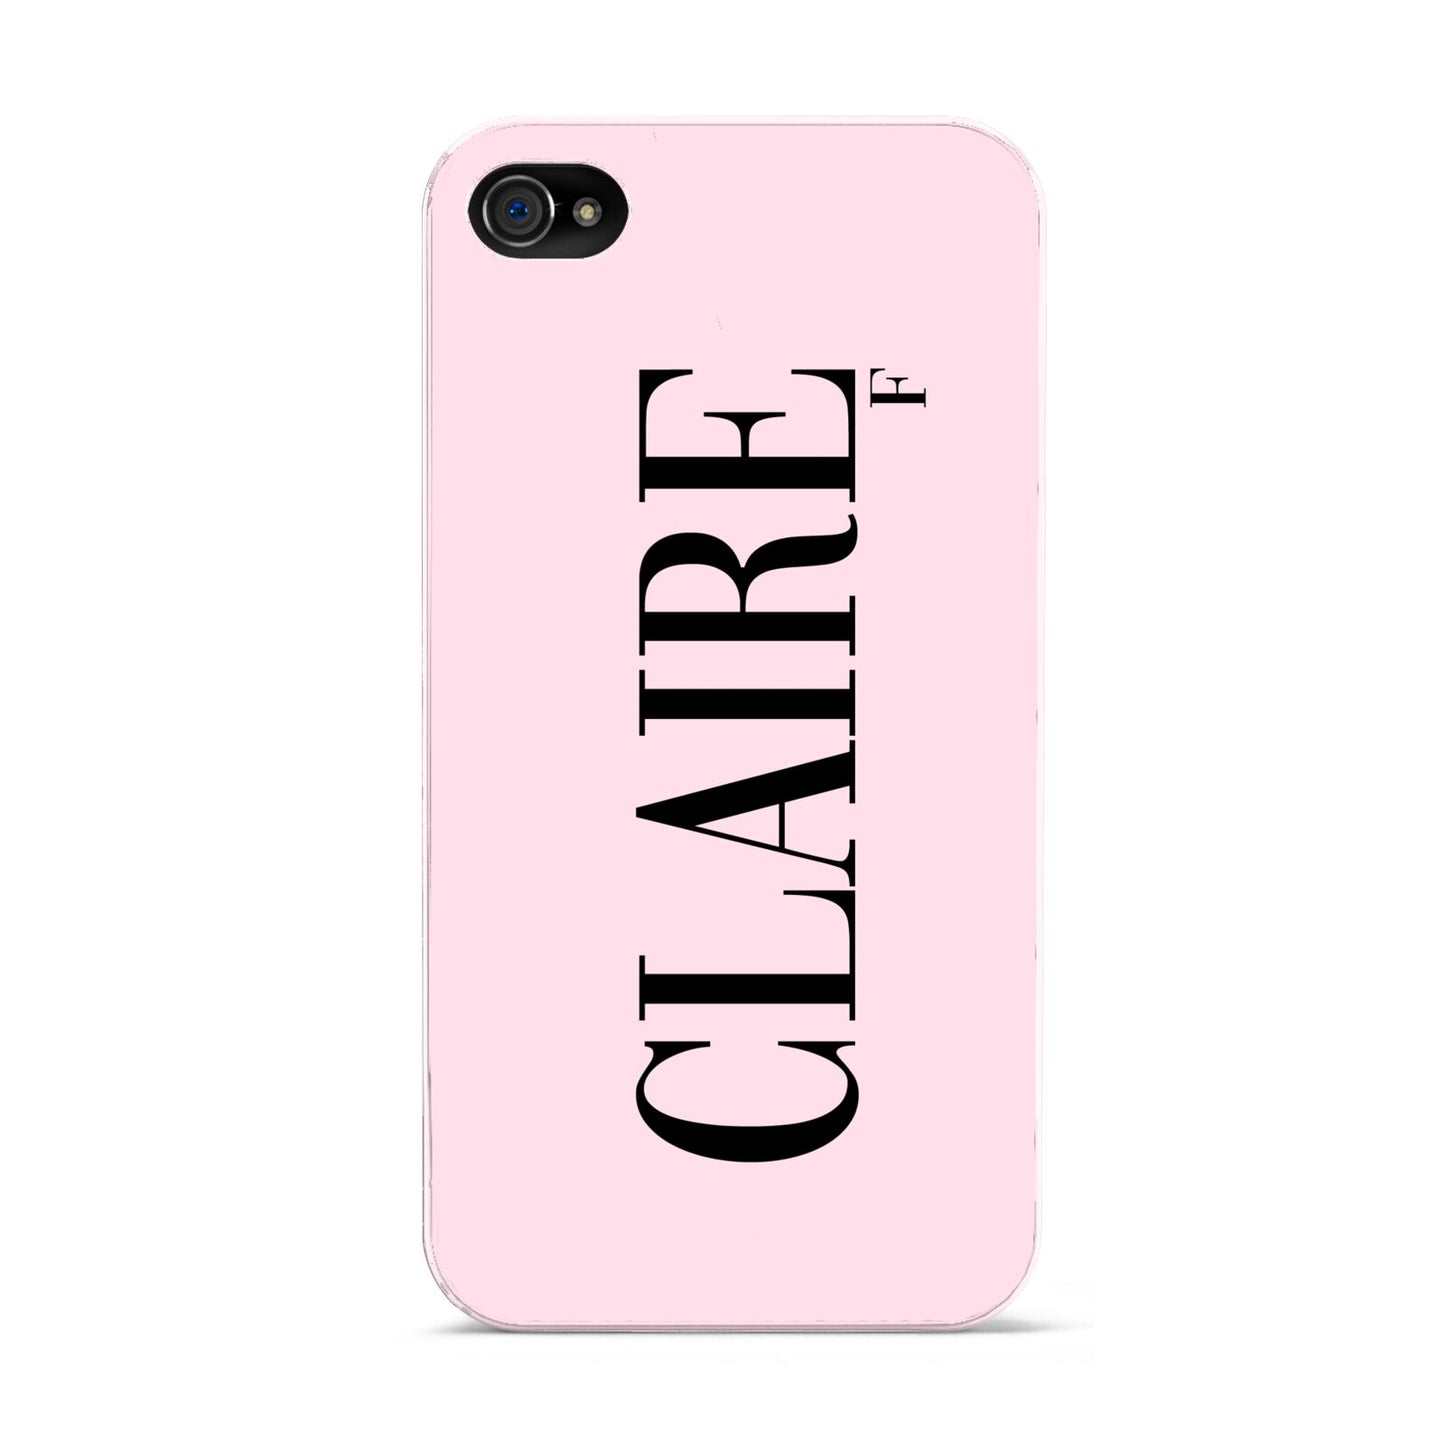 Personalised Pink Black Name Apple iPhone 4s Case